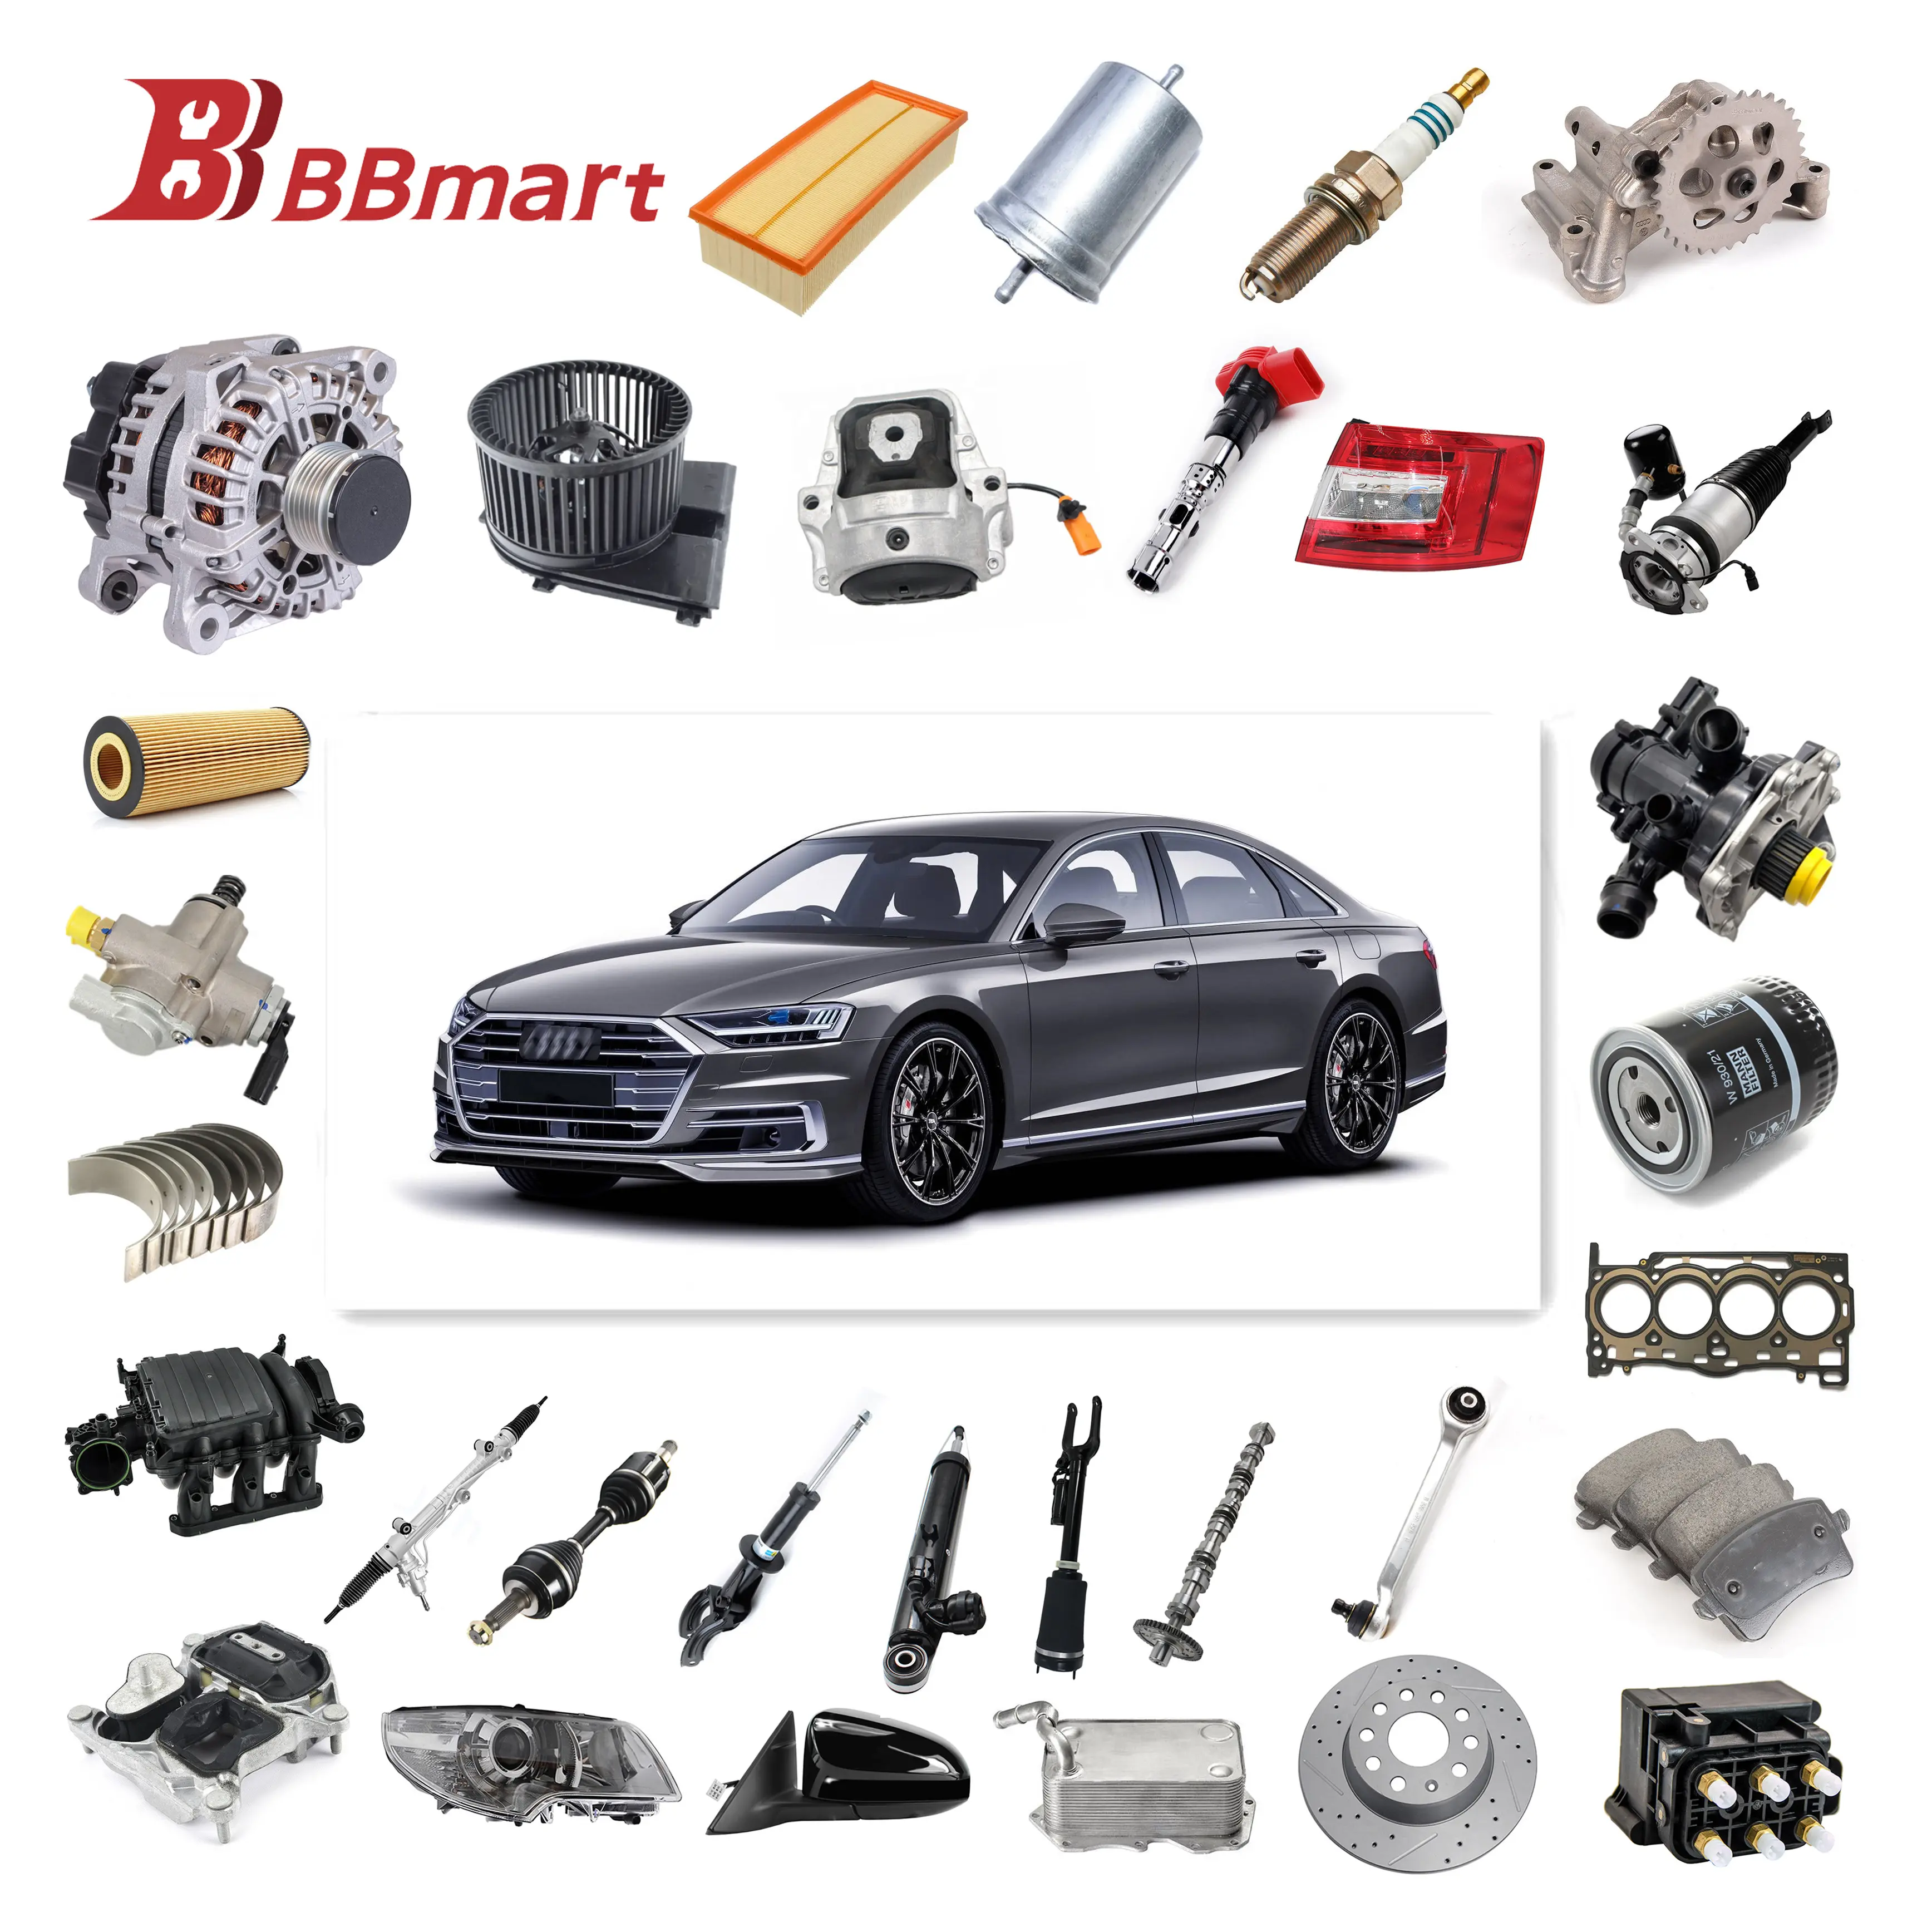 Bbmart Auto Spare Car Parts Automotive Engine Parts Other Auto Spare Car Parts All Models for Audi Hot Sell Model A3 A4 A5 A6 Vw